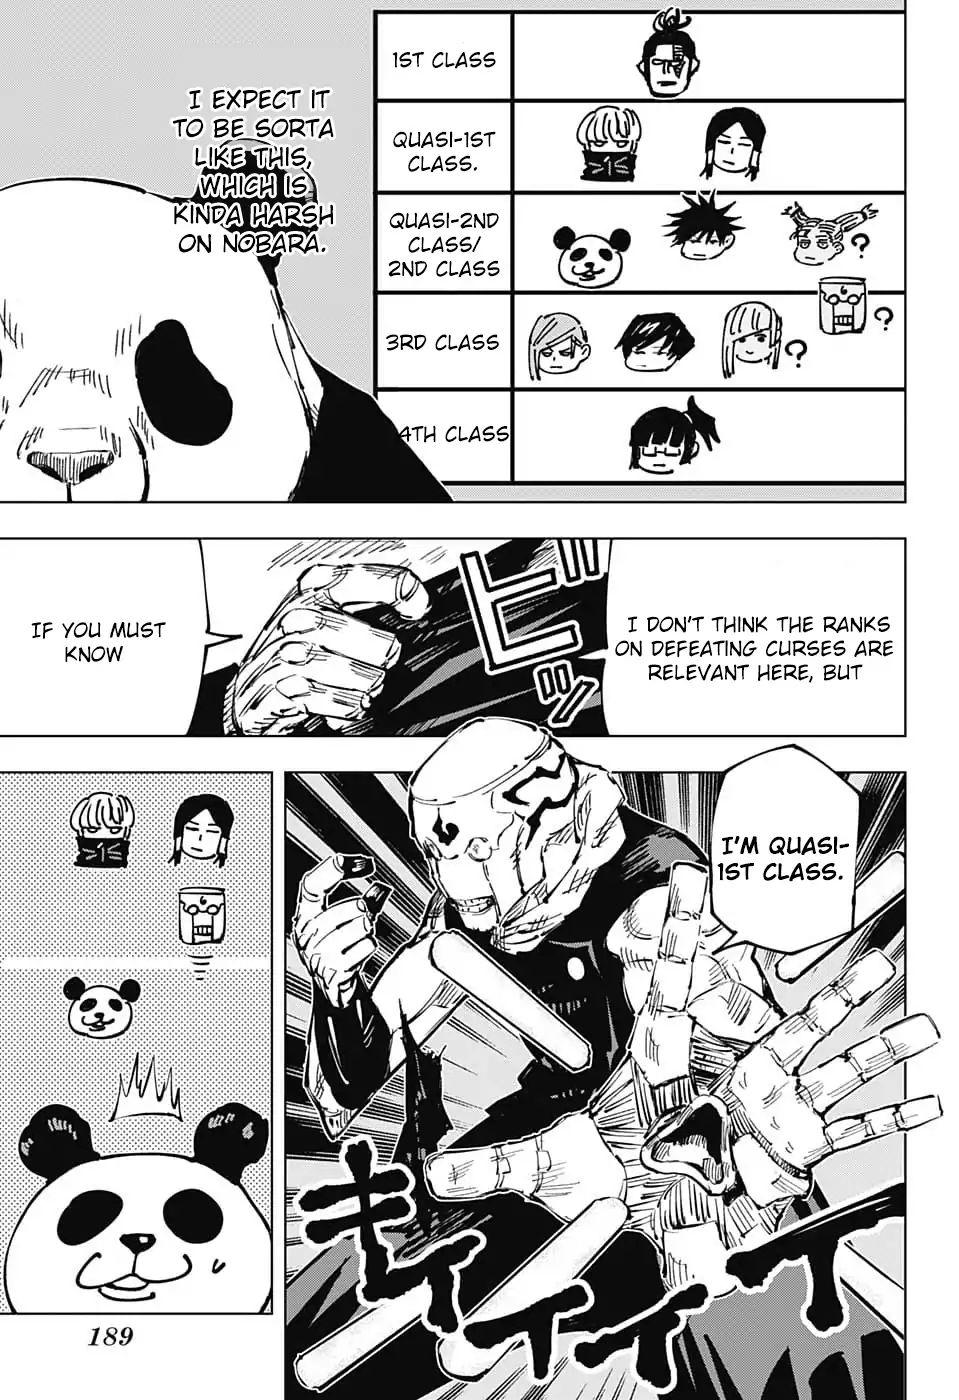 Jujutsu Kaisen Chapter 38: Exchange Festival With The Kyoto School - Team Battle 5 page 7 - Mangakakalot